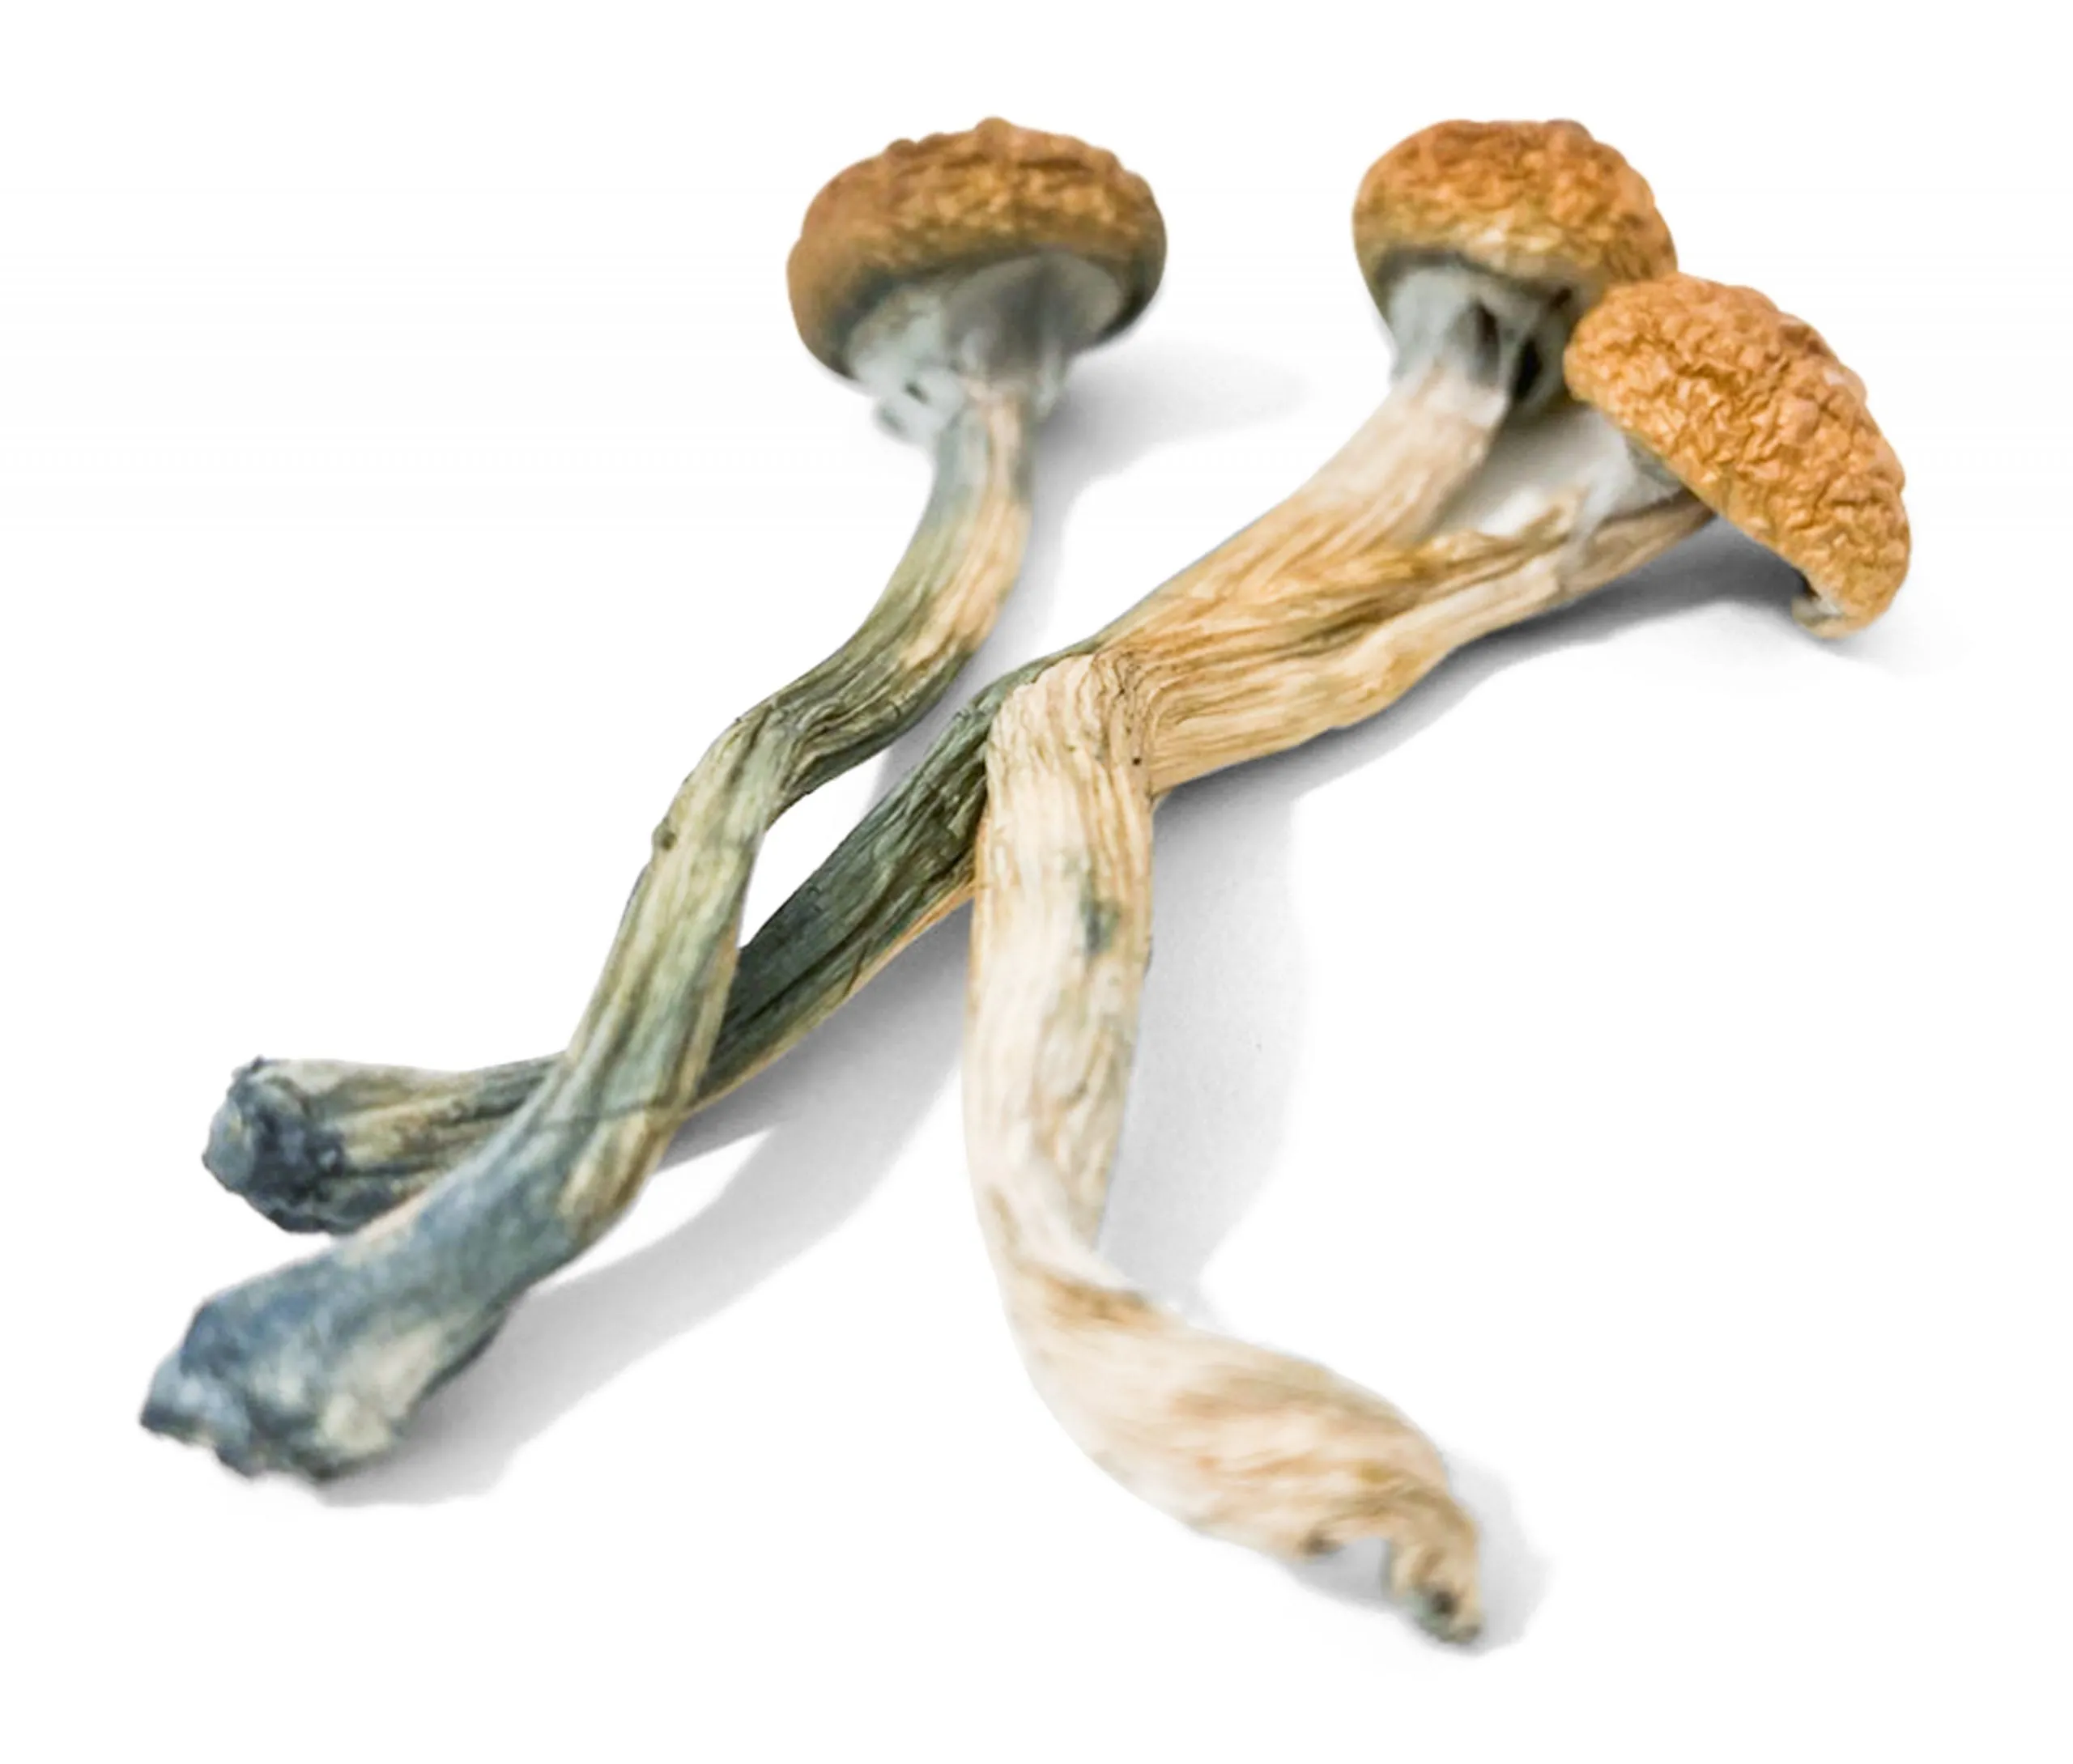 3.5 Grams Dried Mushrooms – Hillbilly Psilocybe Cubensis